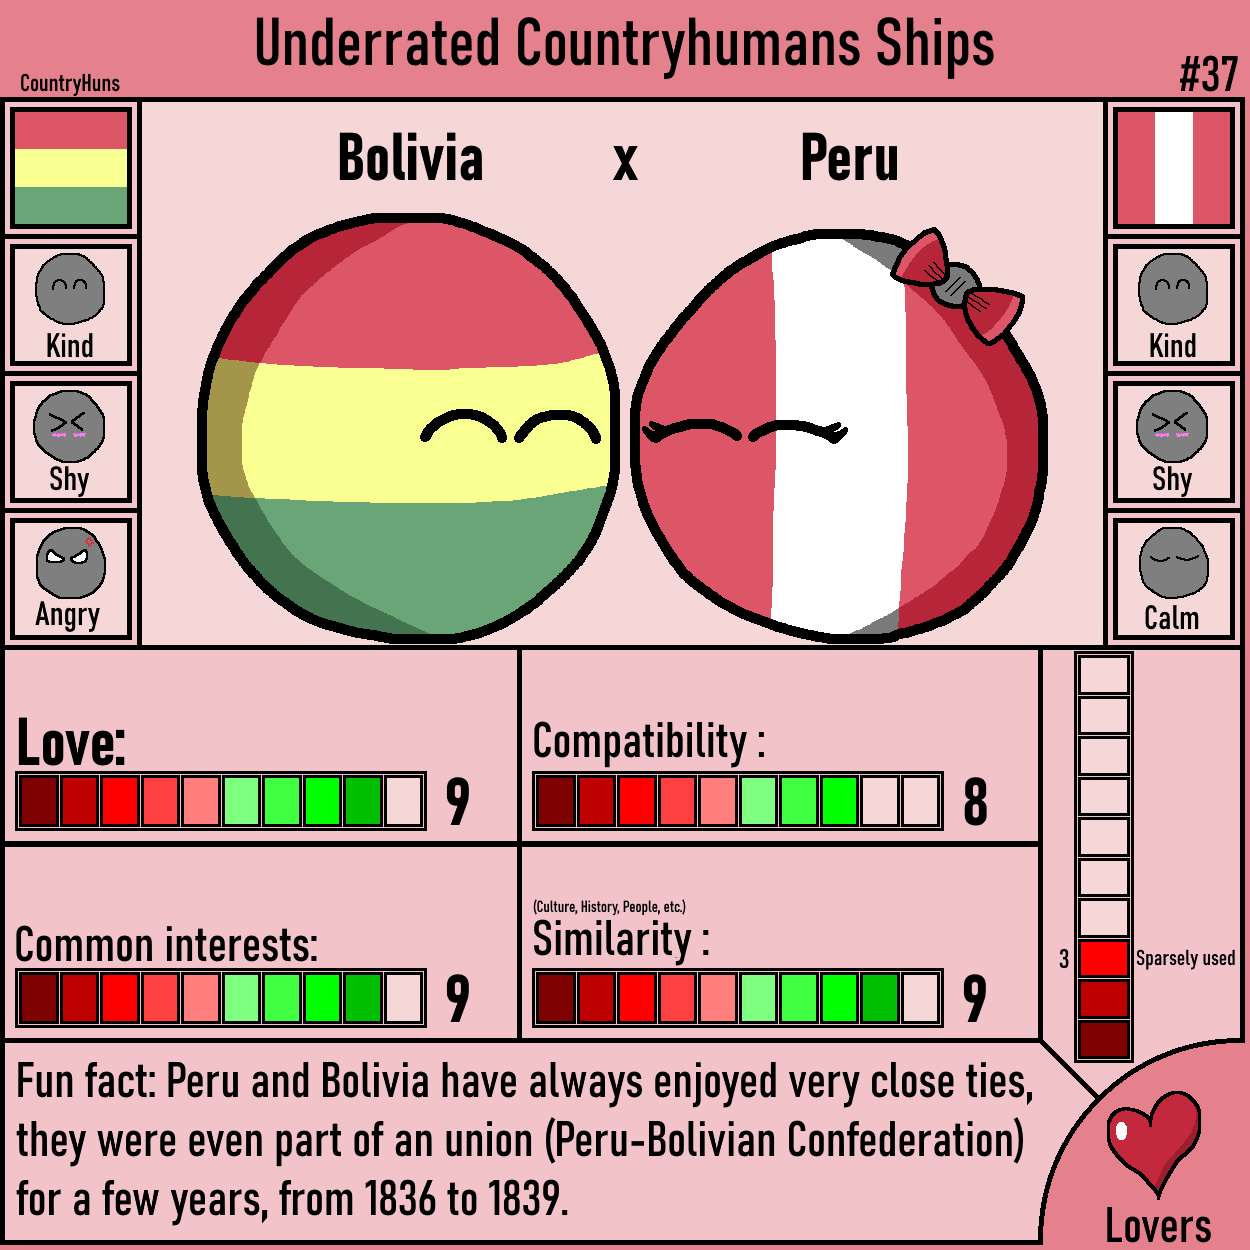 Favorite CountryHumans ship?